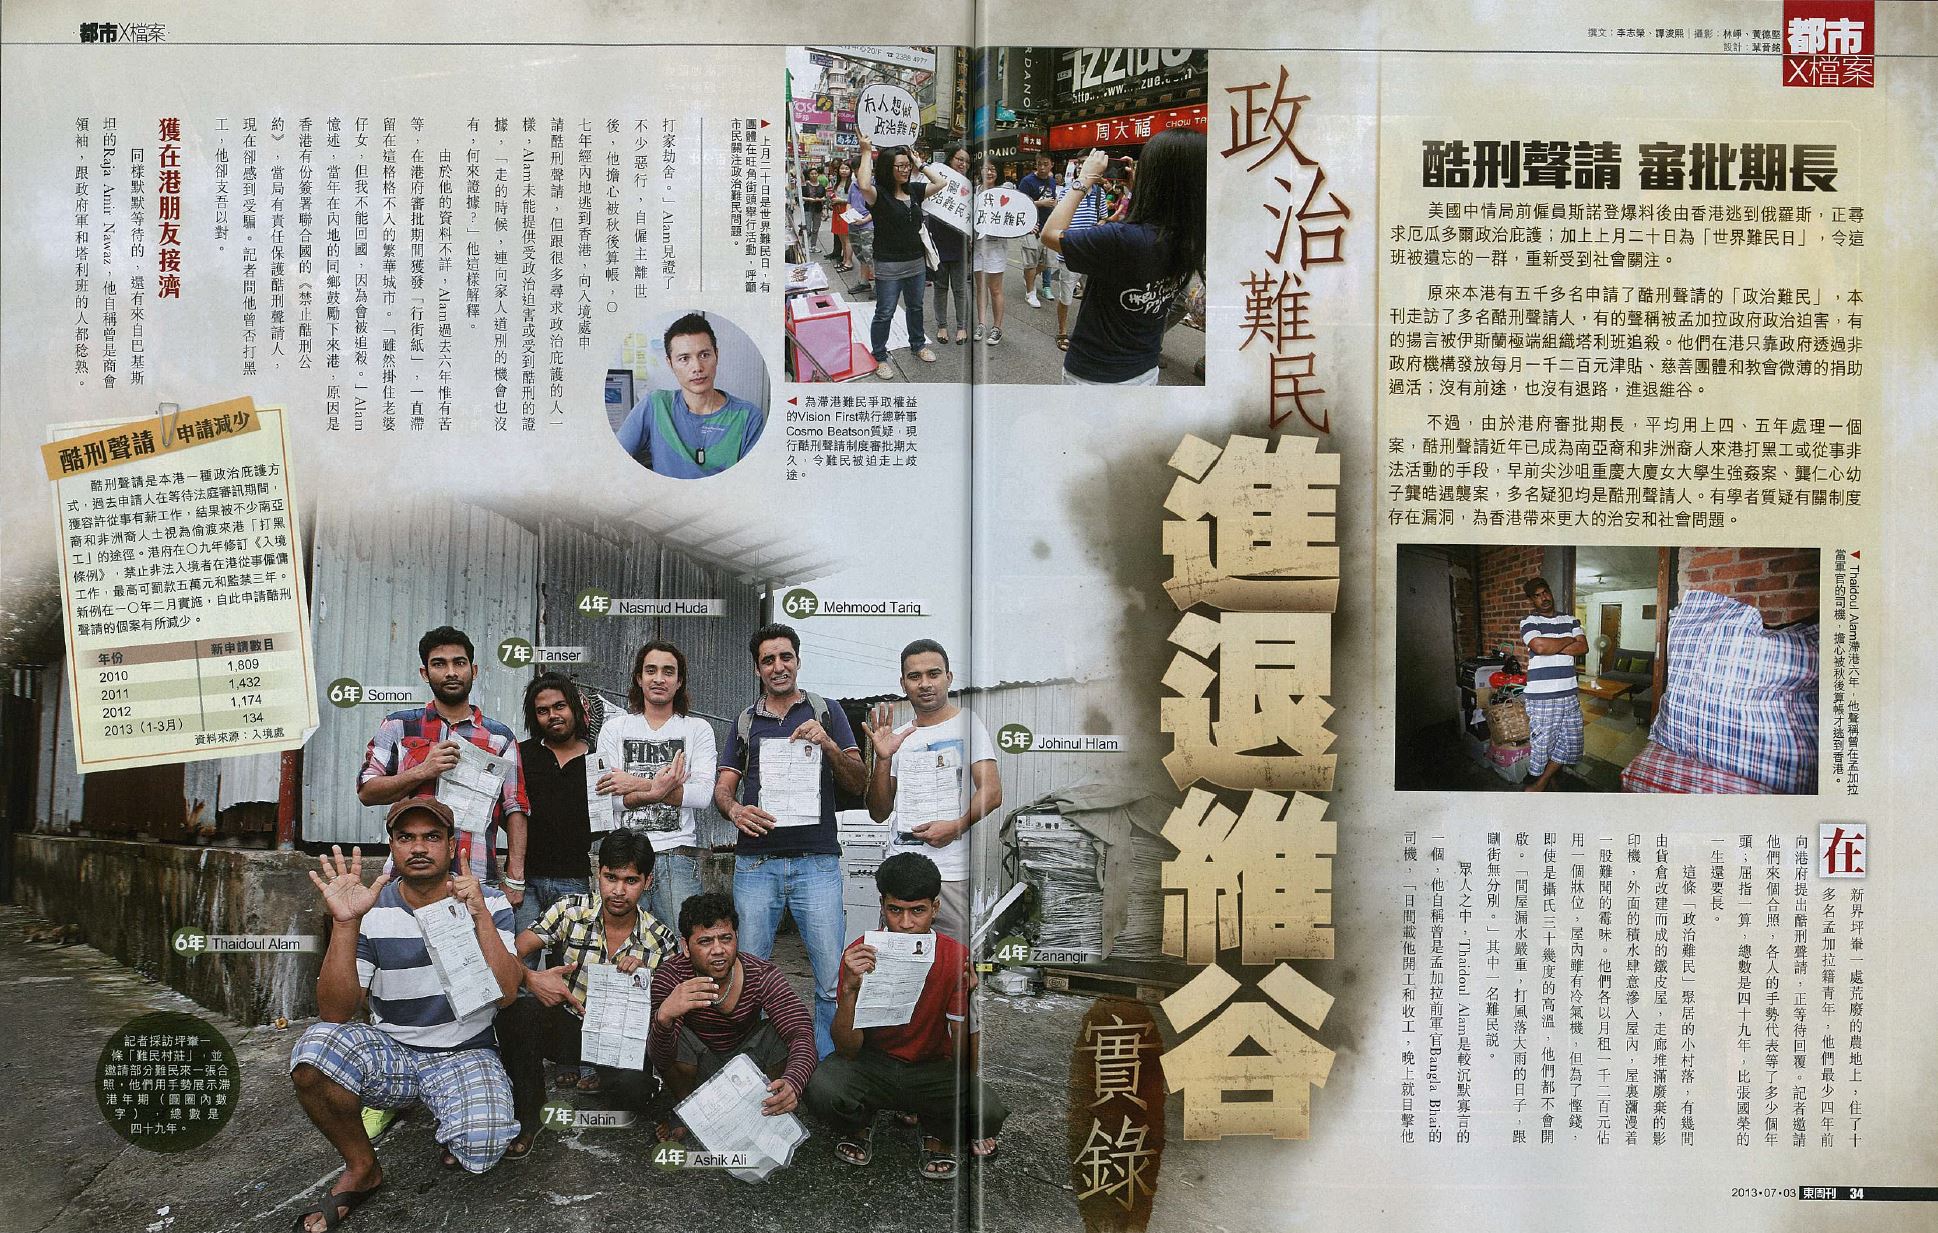 Eastweek on refugee slums (first page) 3Jul2013